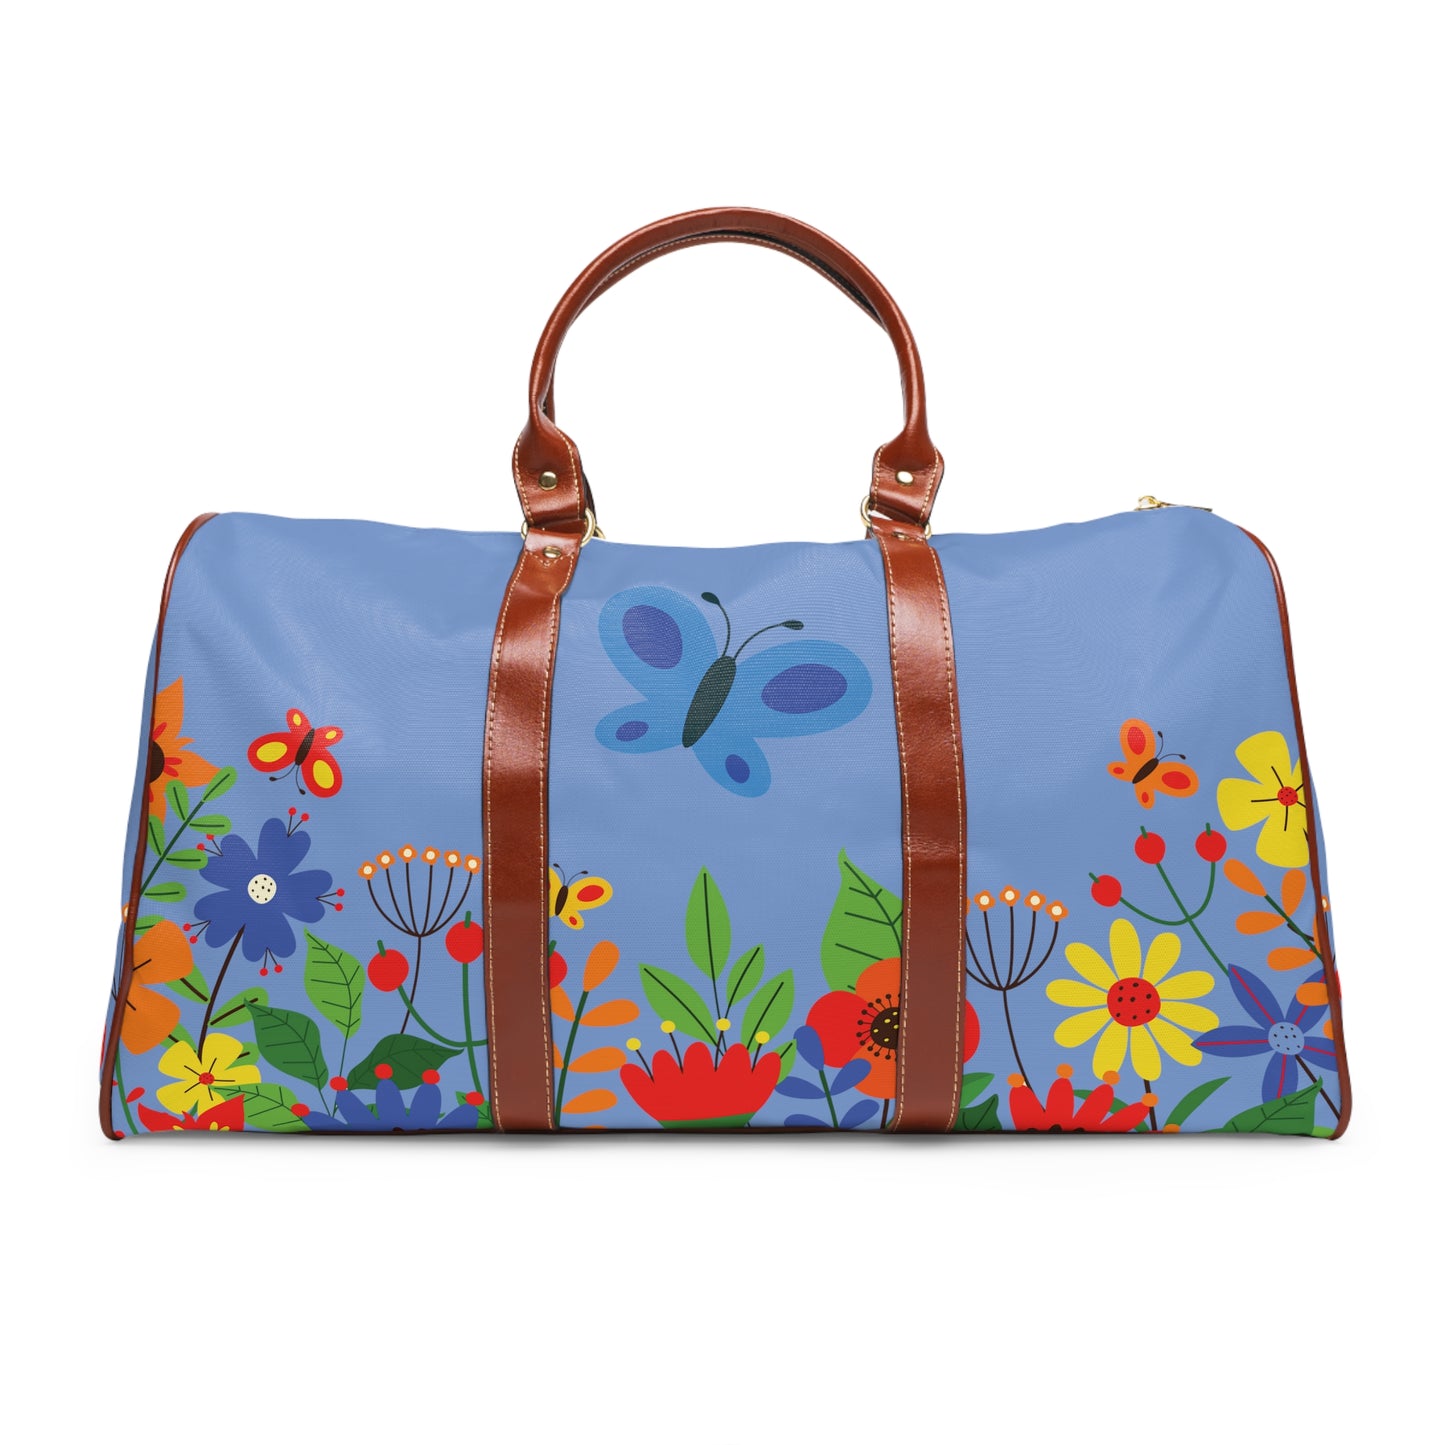 Bright Summer flowers - Fennel Flower 74a6ff - Waterproof Travel Bag